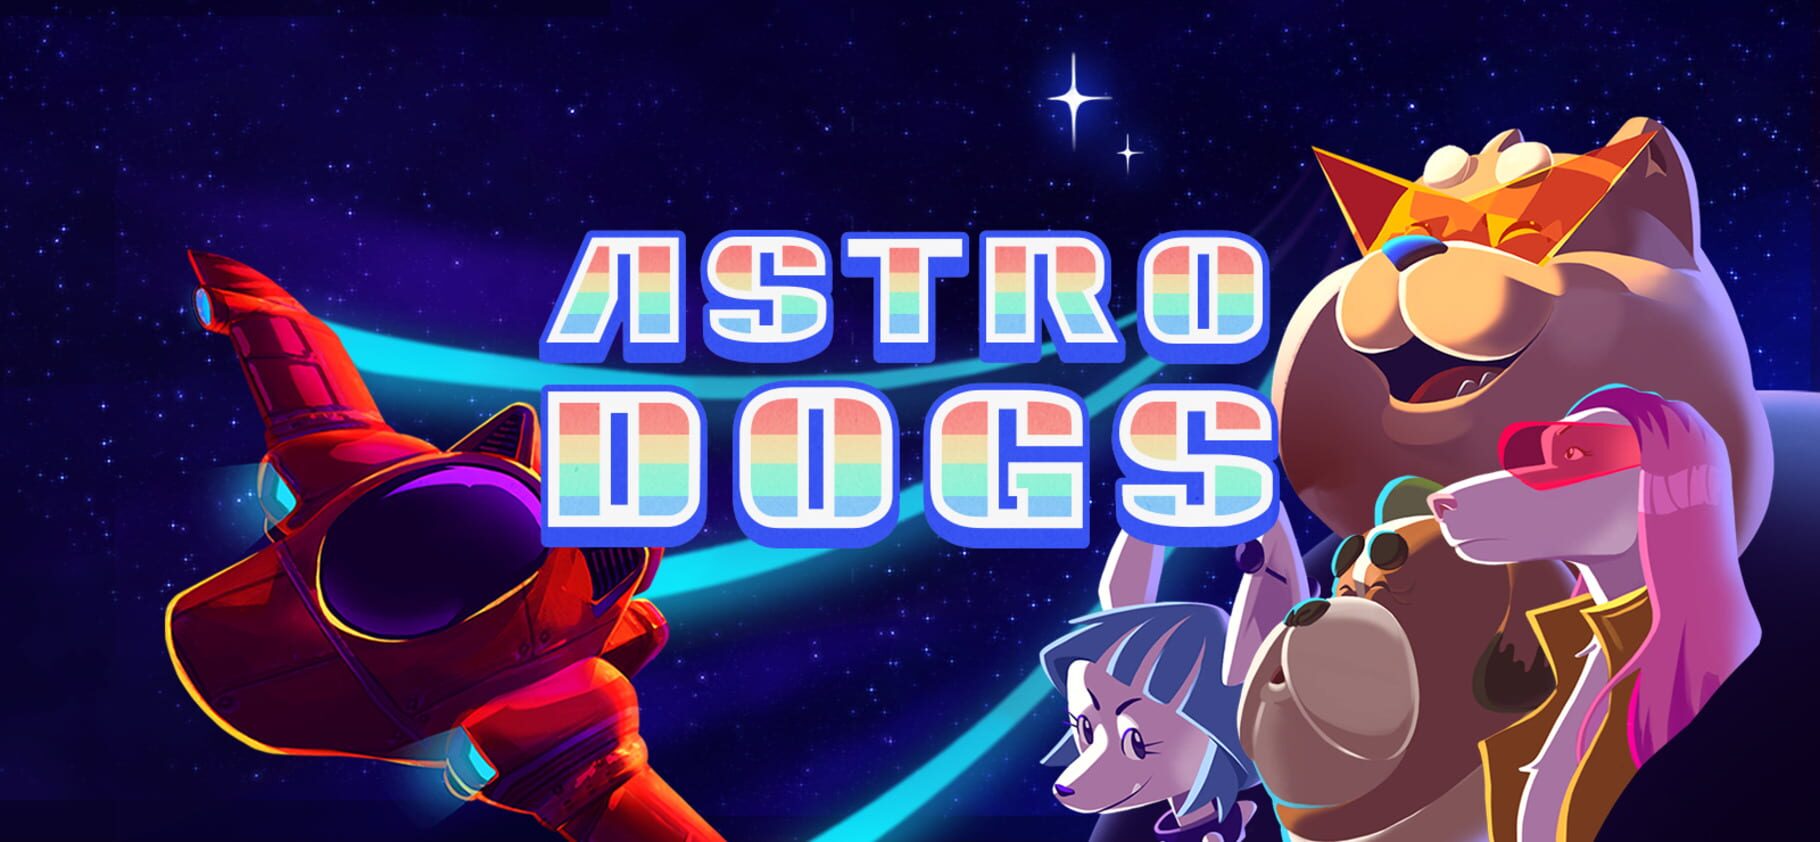 Astrodogs artwork